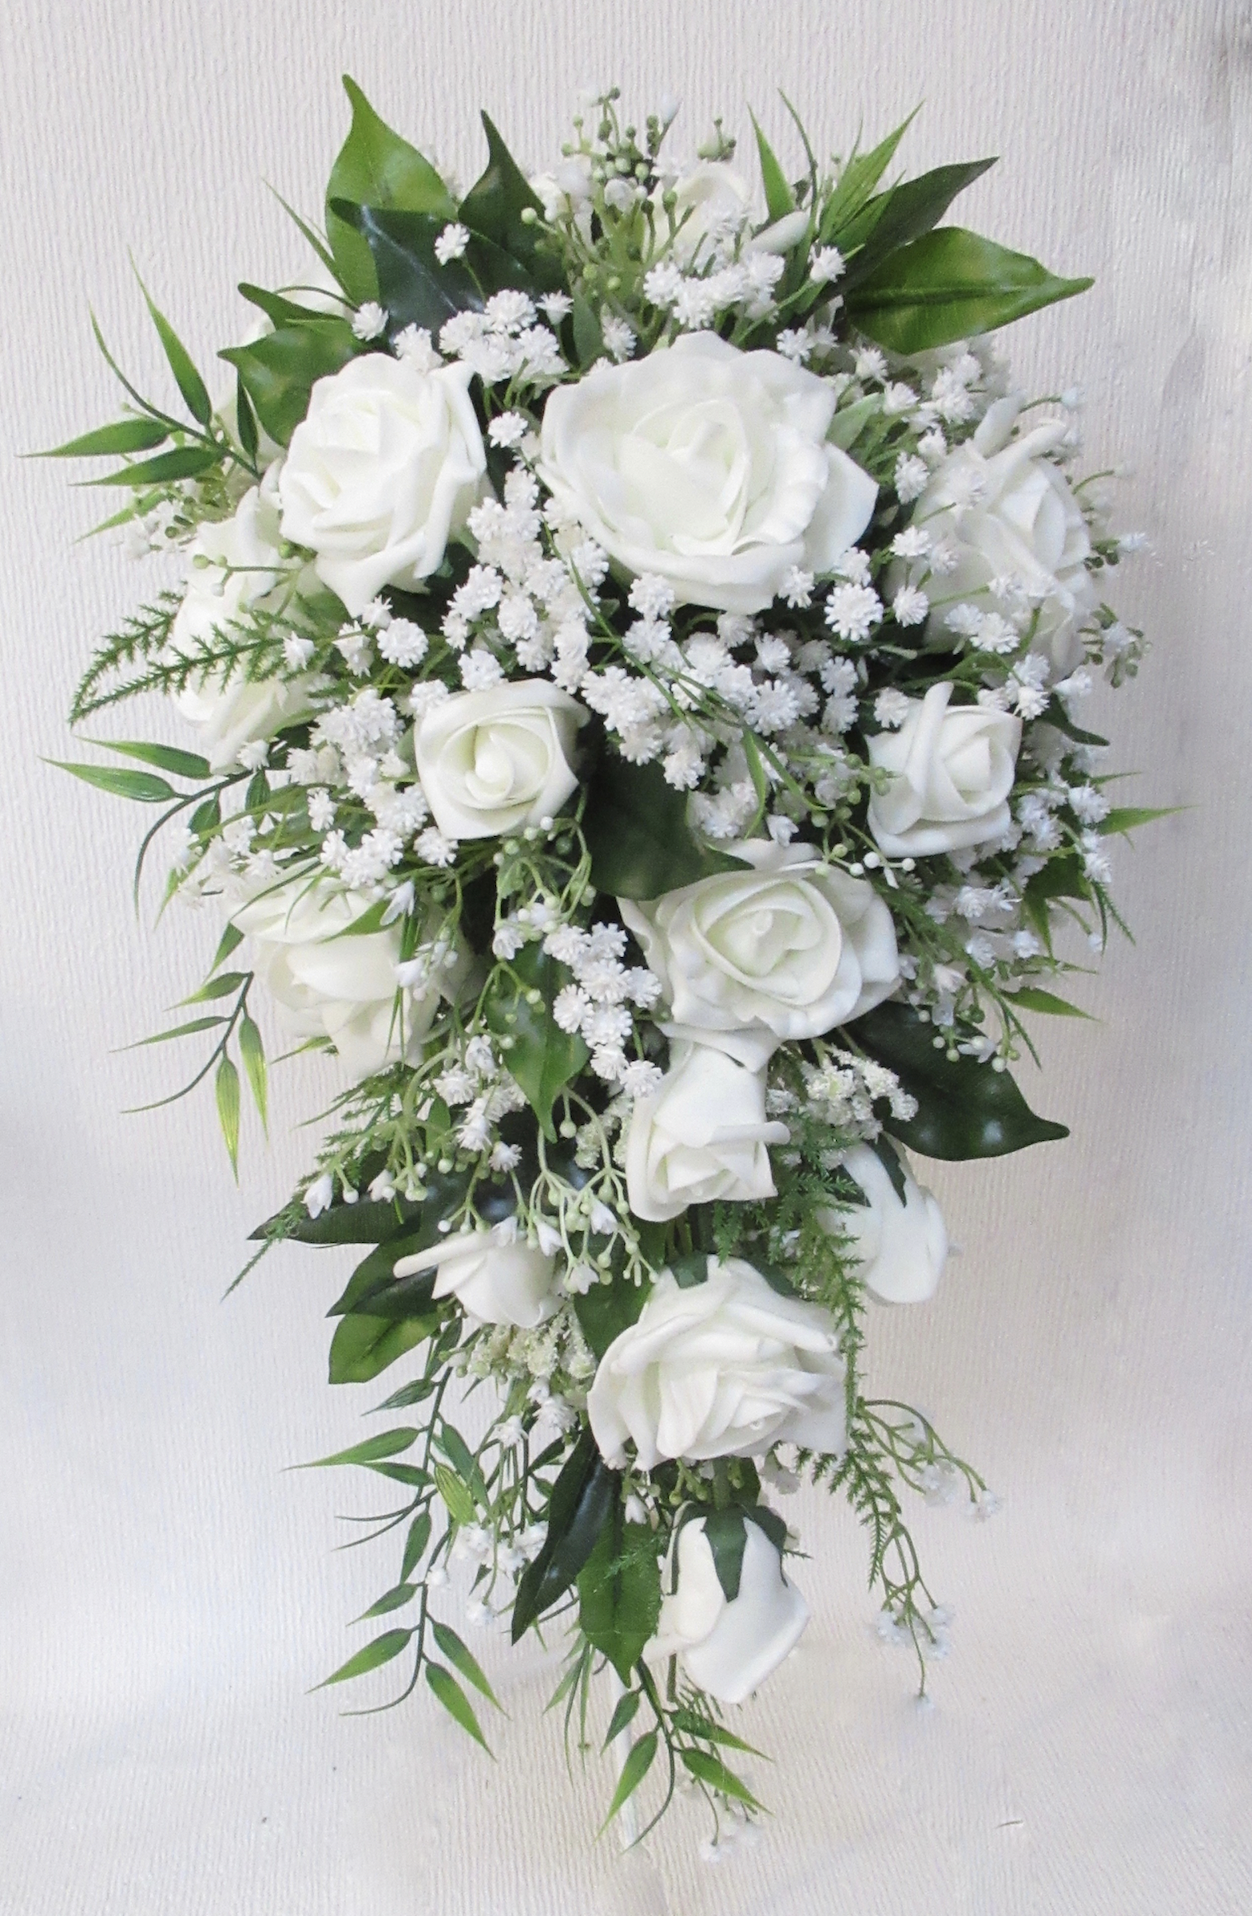 Rustic rose and gypsophila wedding bouquet, rustic inspired wedding flowers